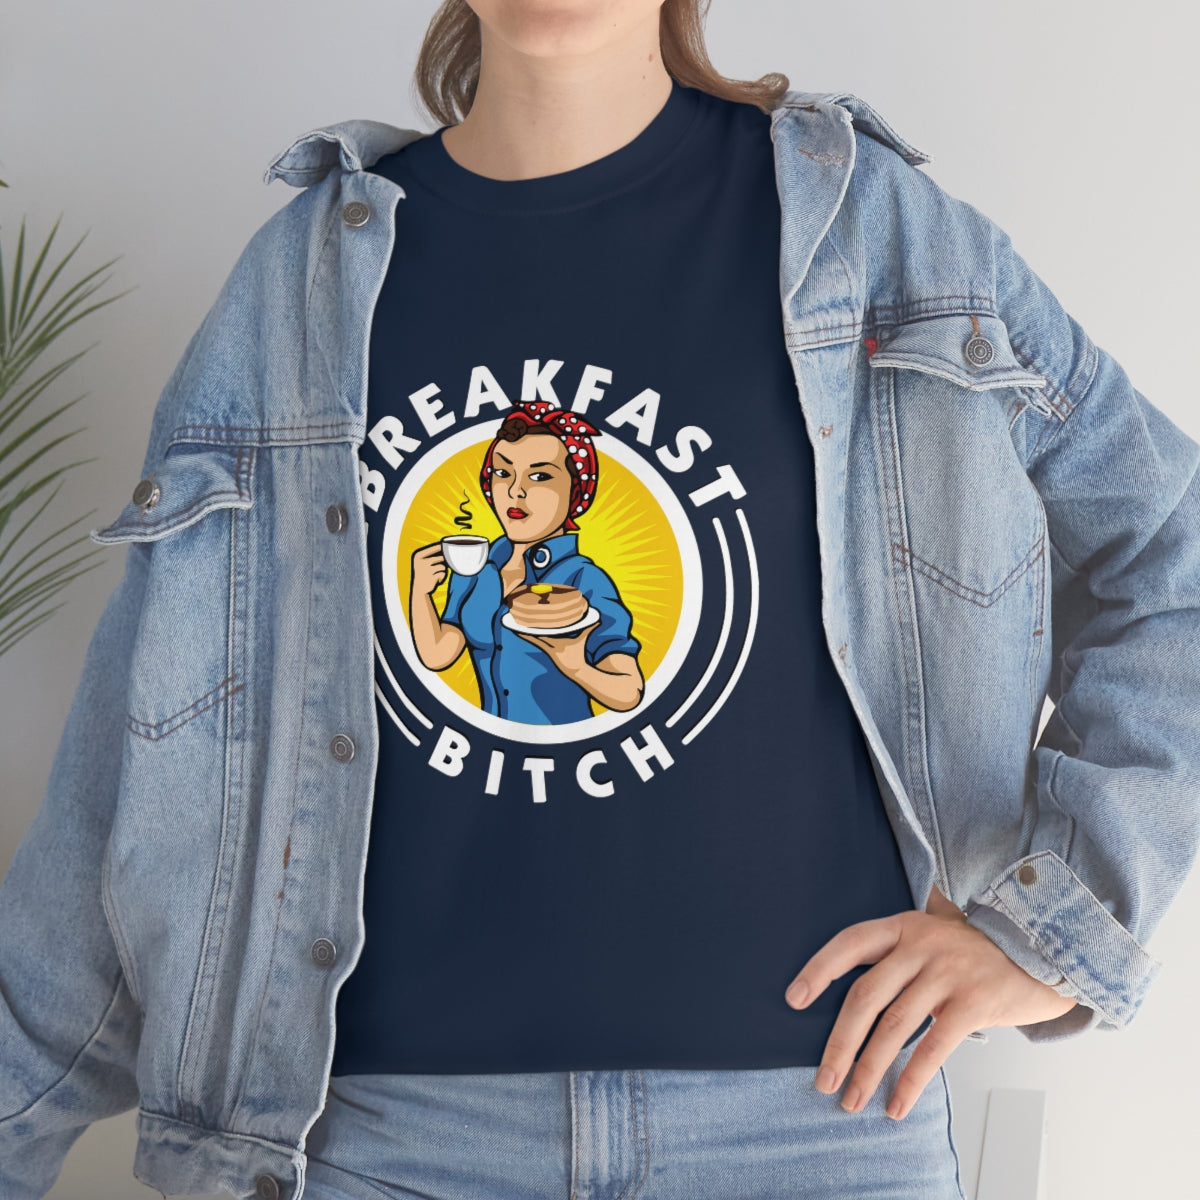 Breakfast Bitch Unisex Heavy Cotton Tee